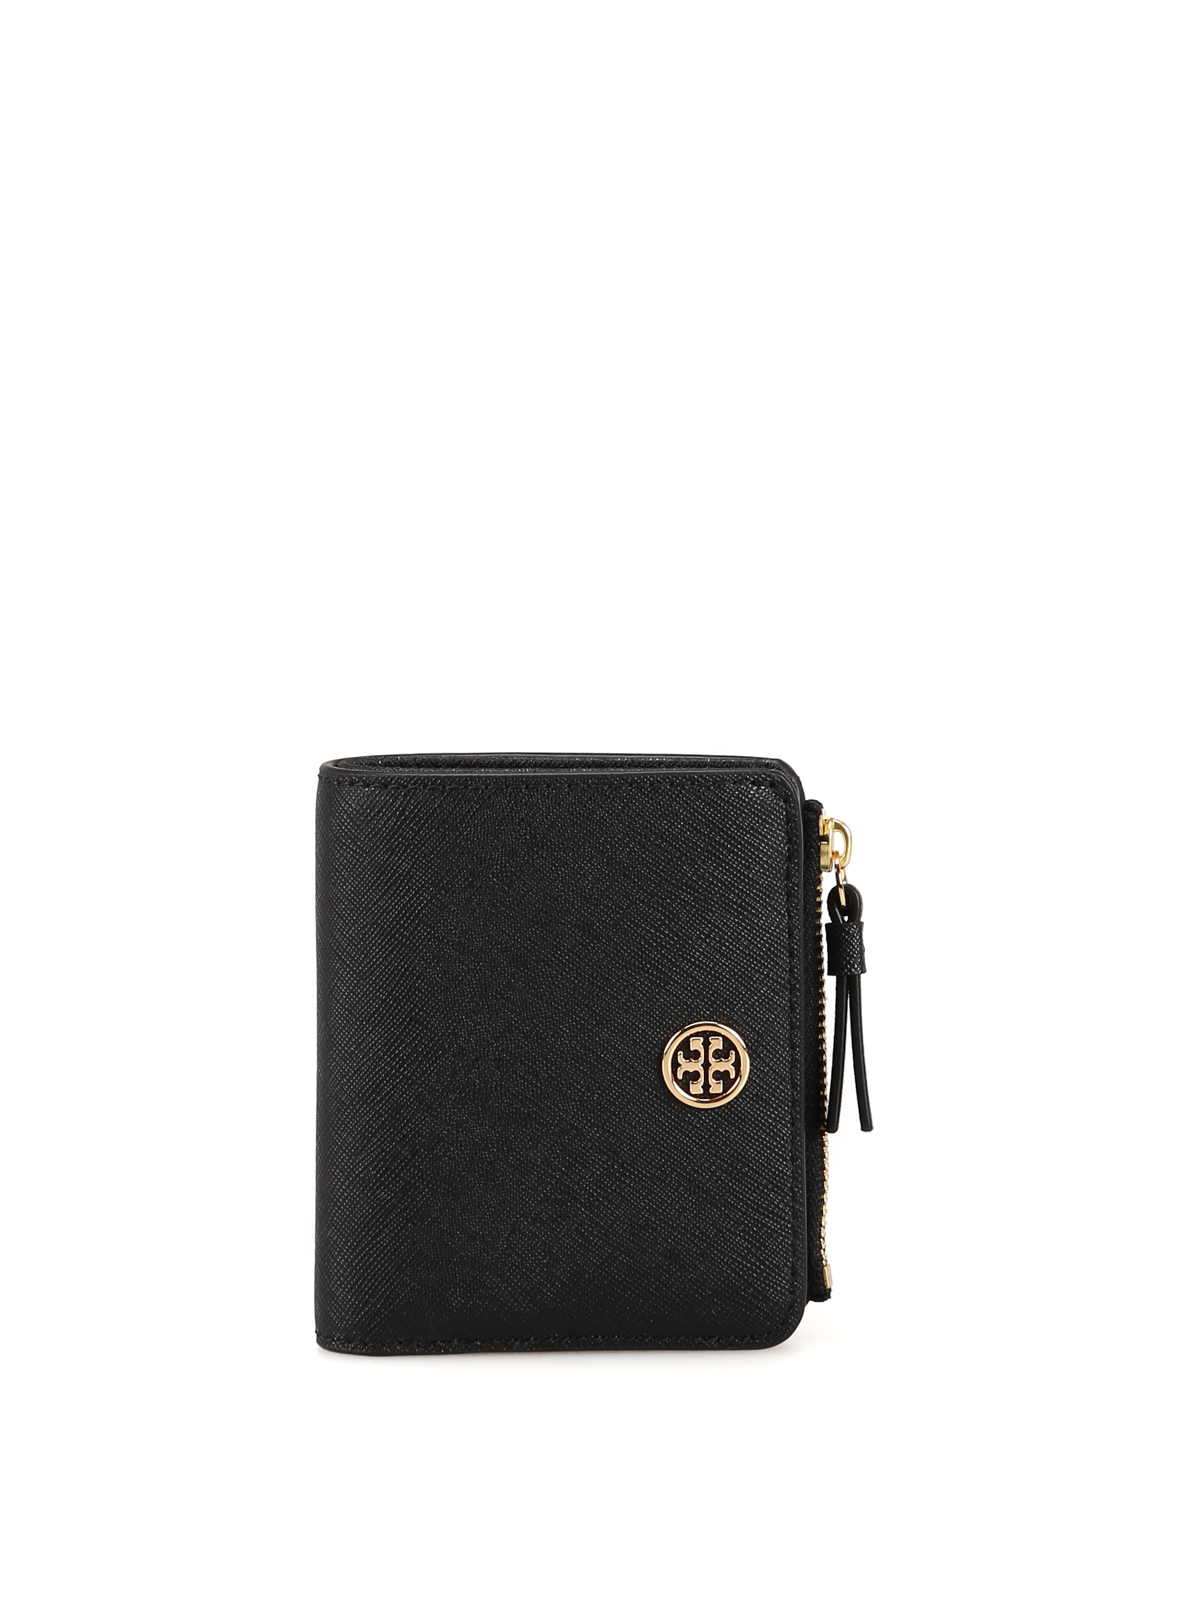 Wallets & purses Tory Burch - Robinson Mini black wallet - 54449001